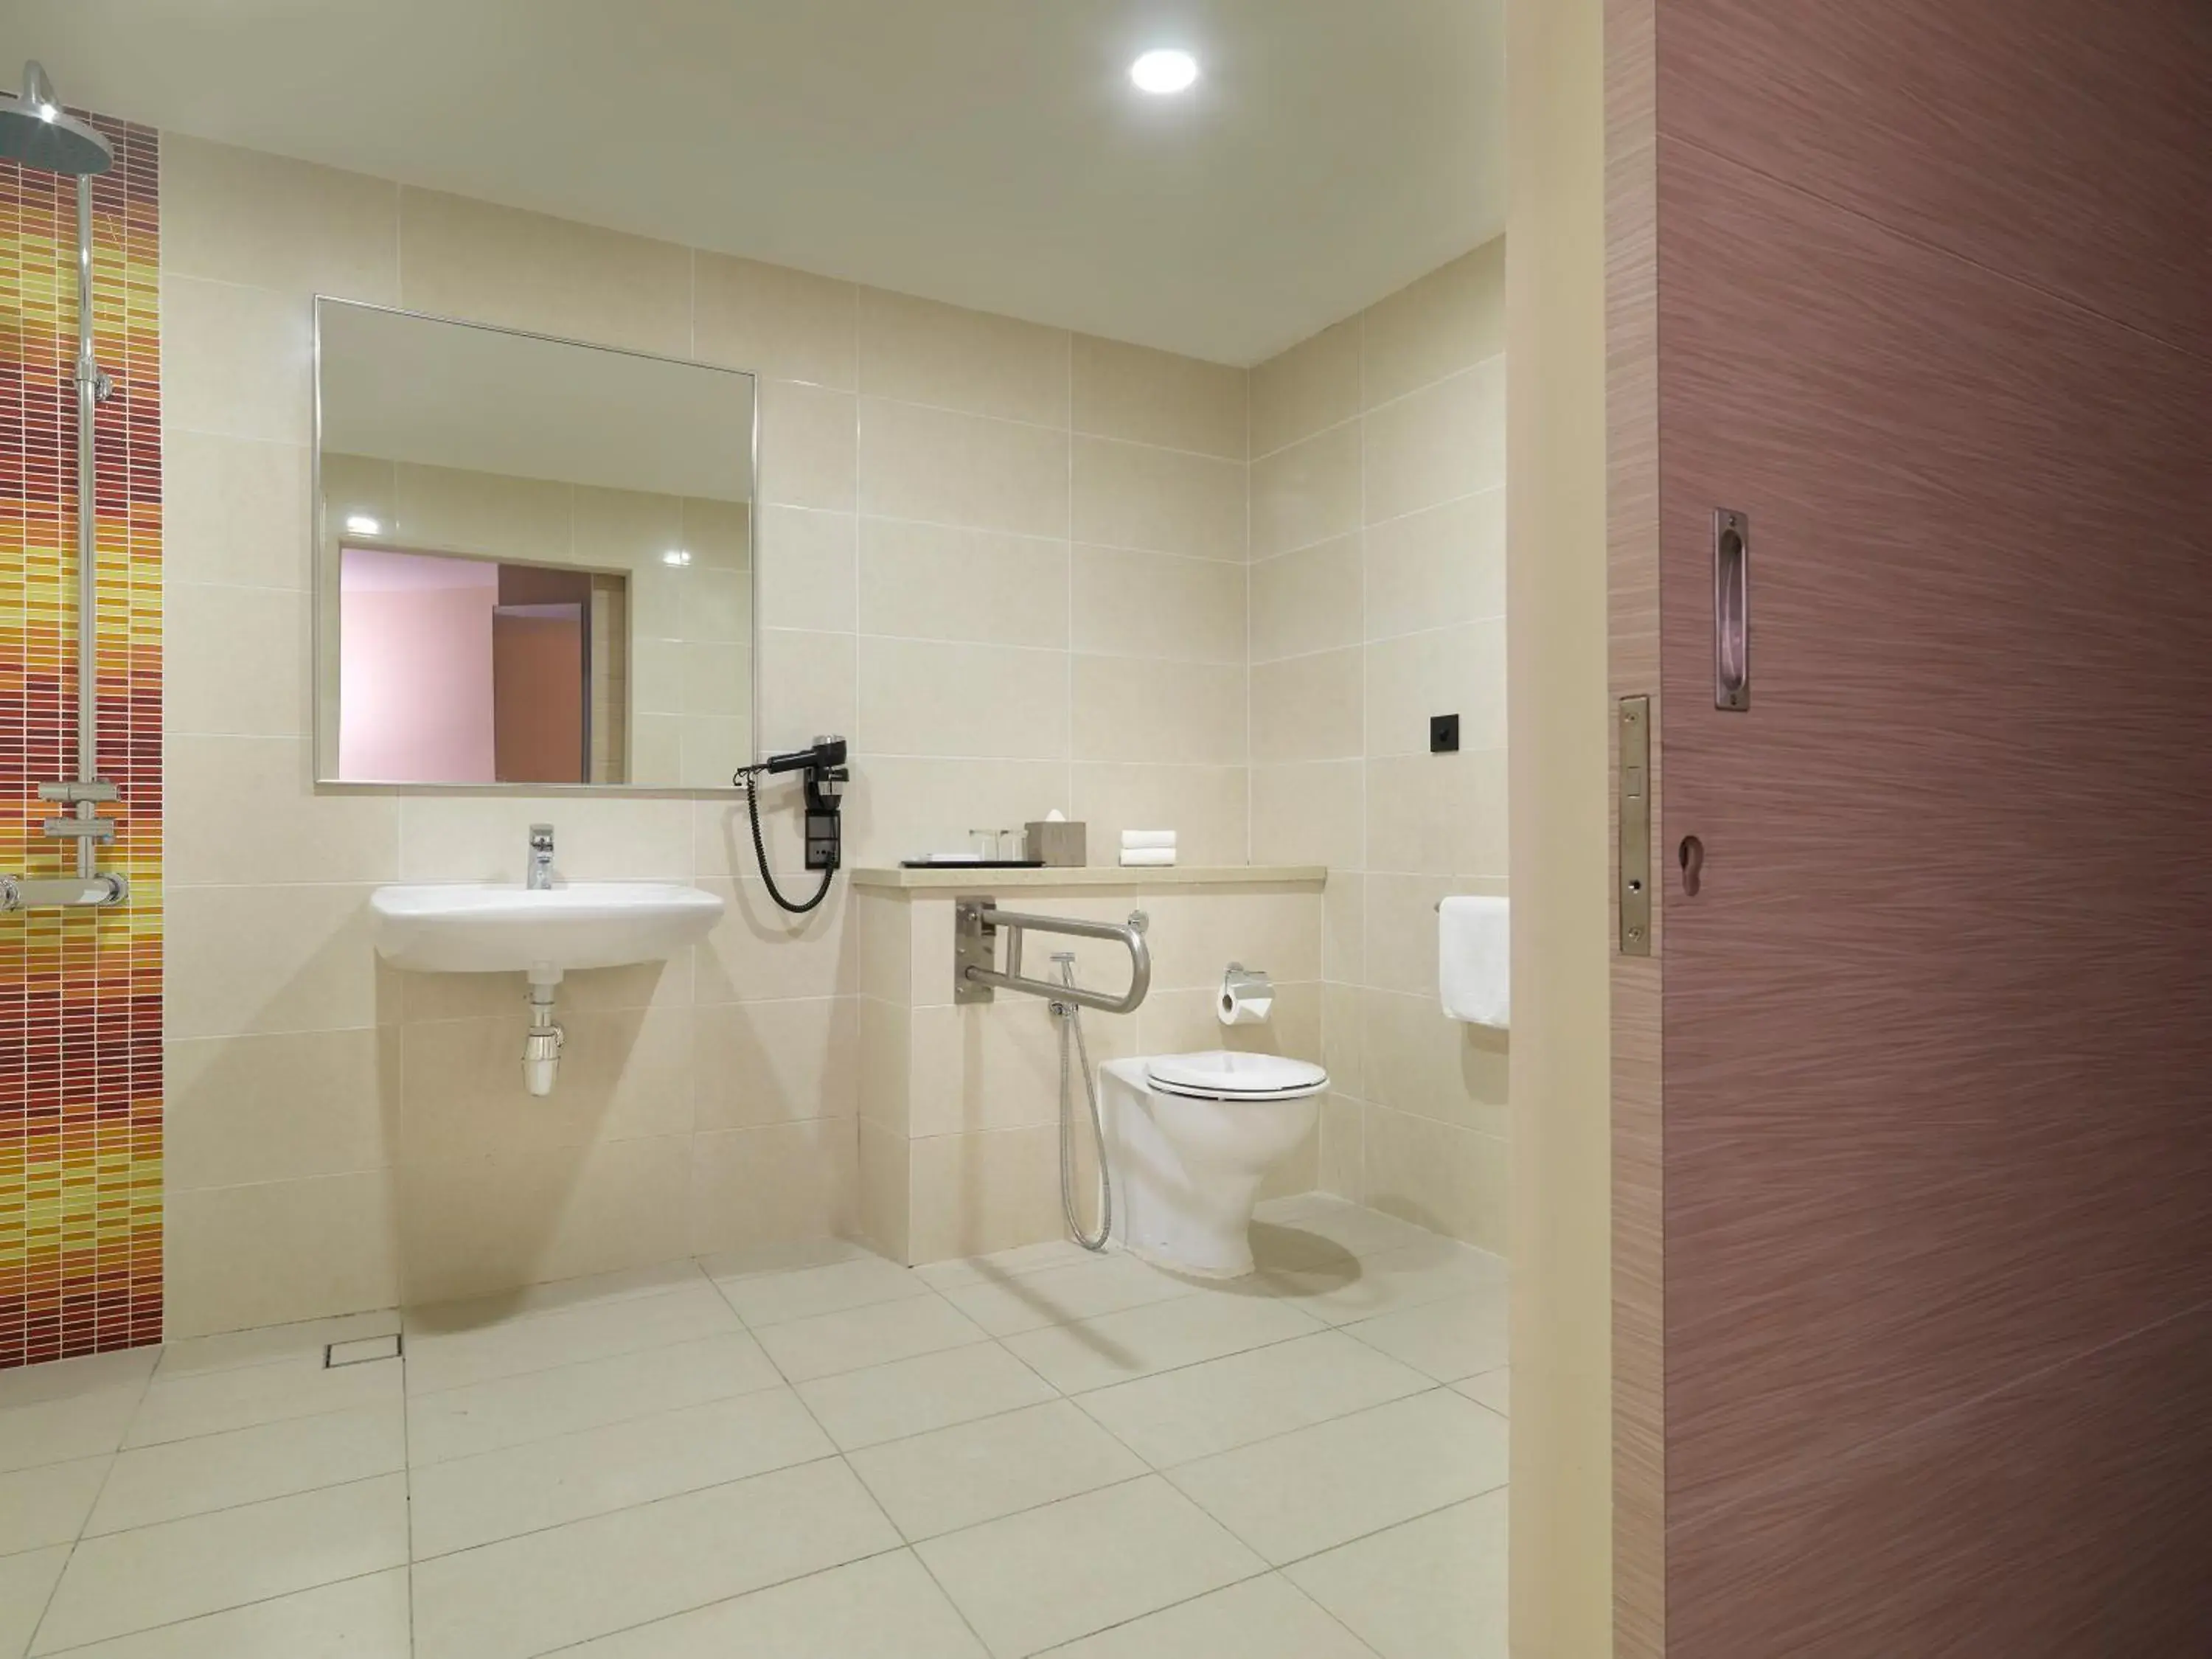 Bathroom in Sama Sama Express klia2 (Airside Transit Hotel)